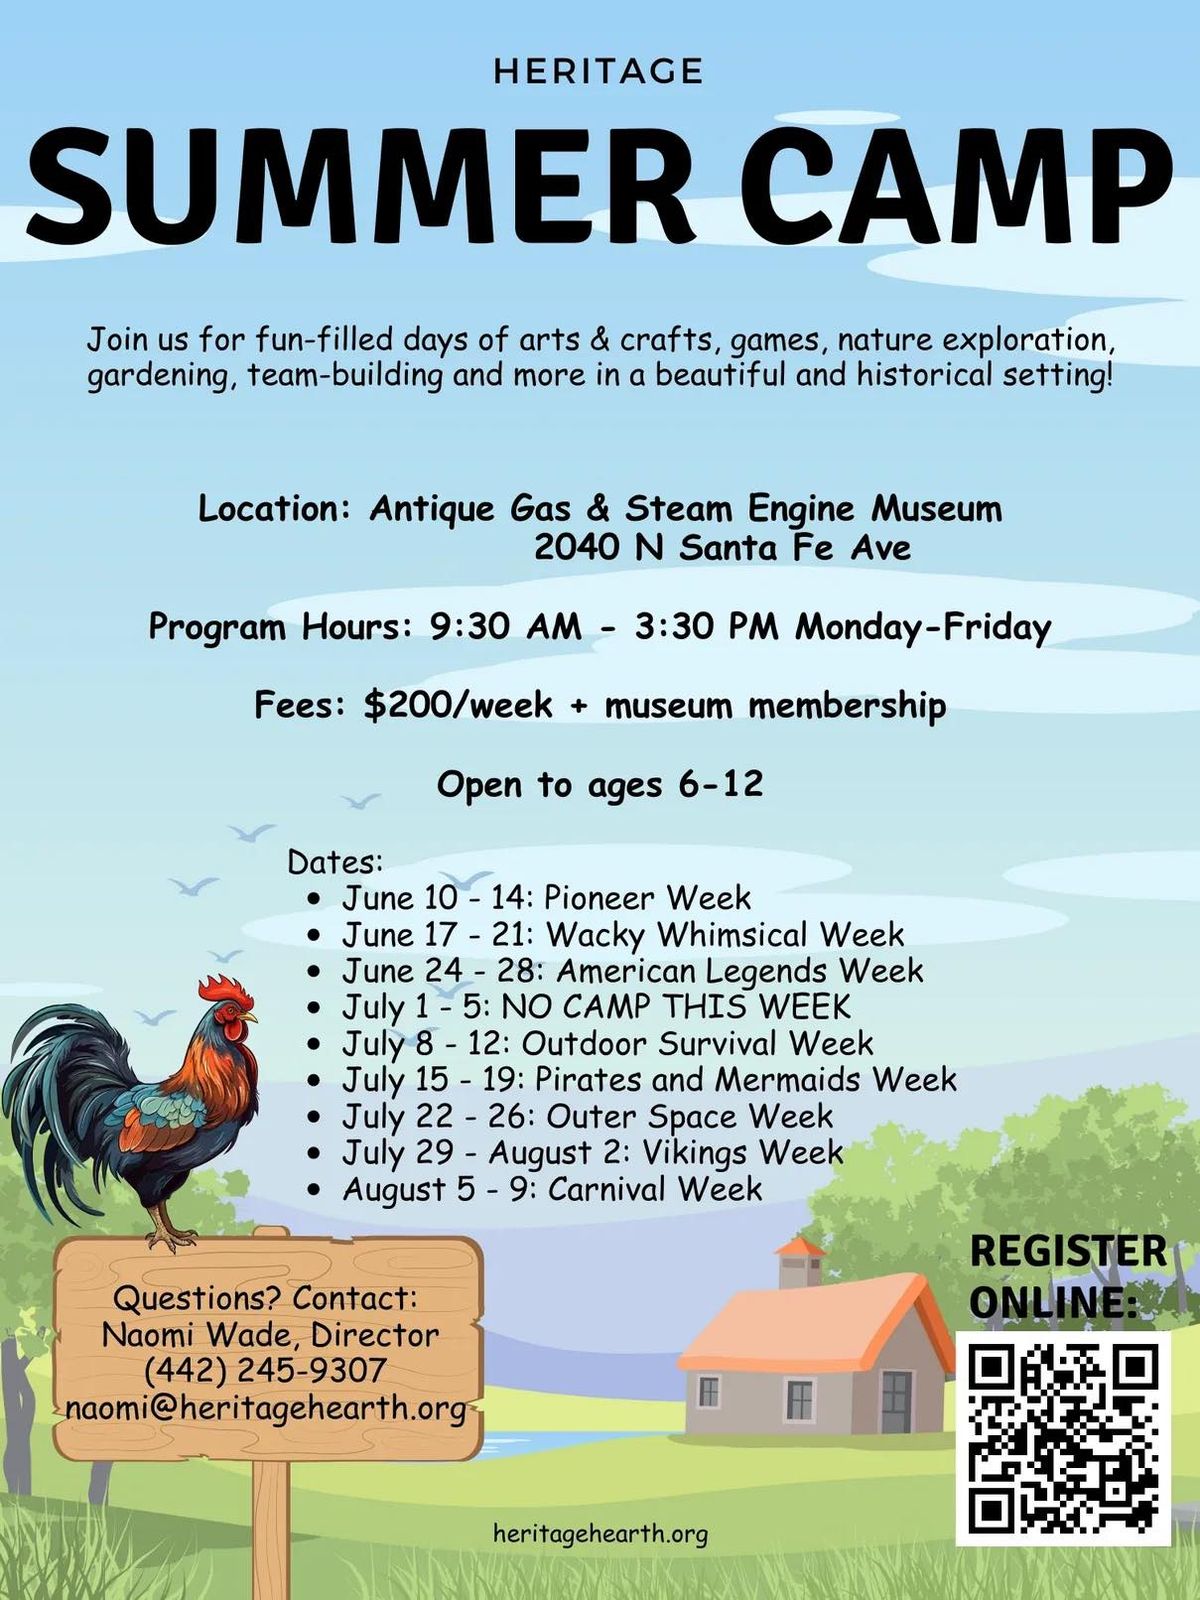 Heritage Summer Camp - Outdoor Survival Week